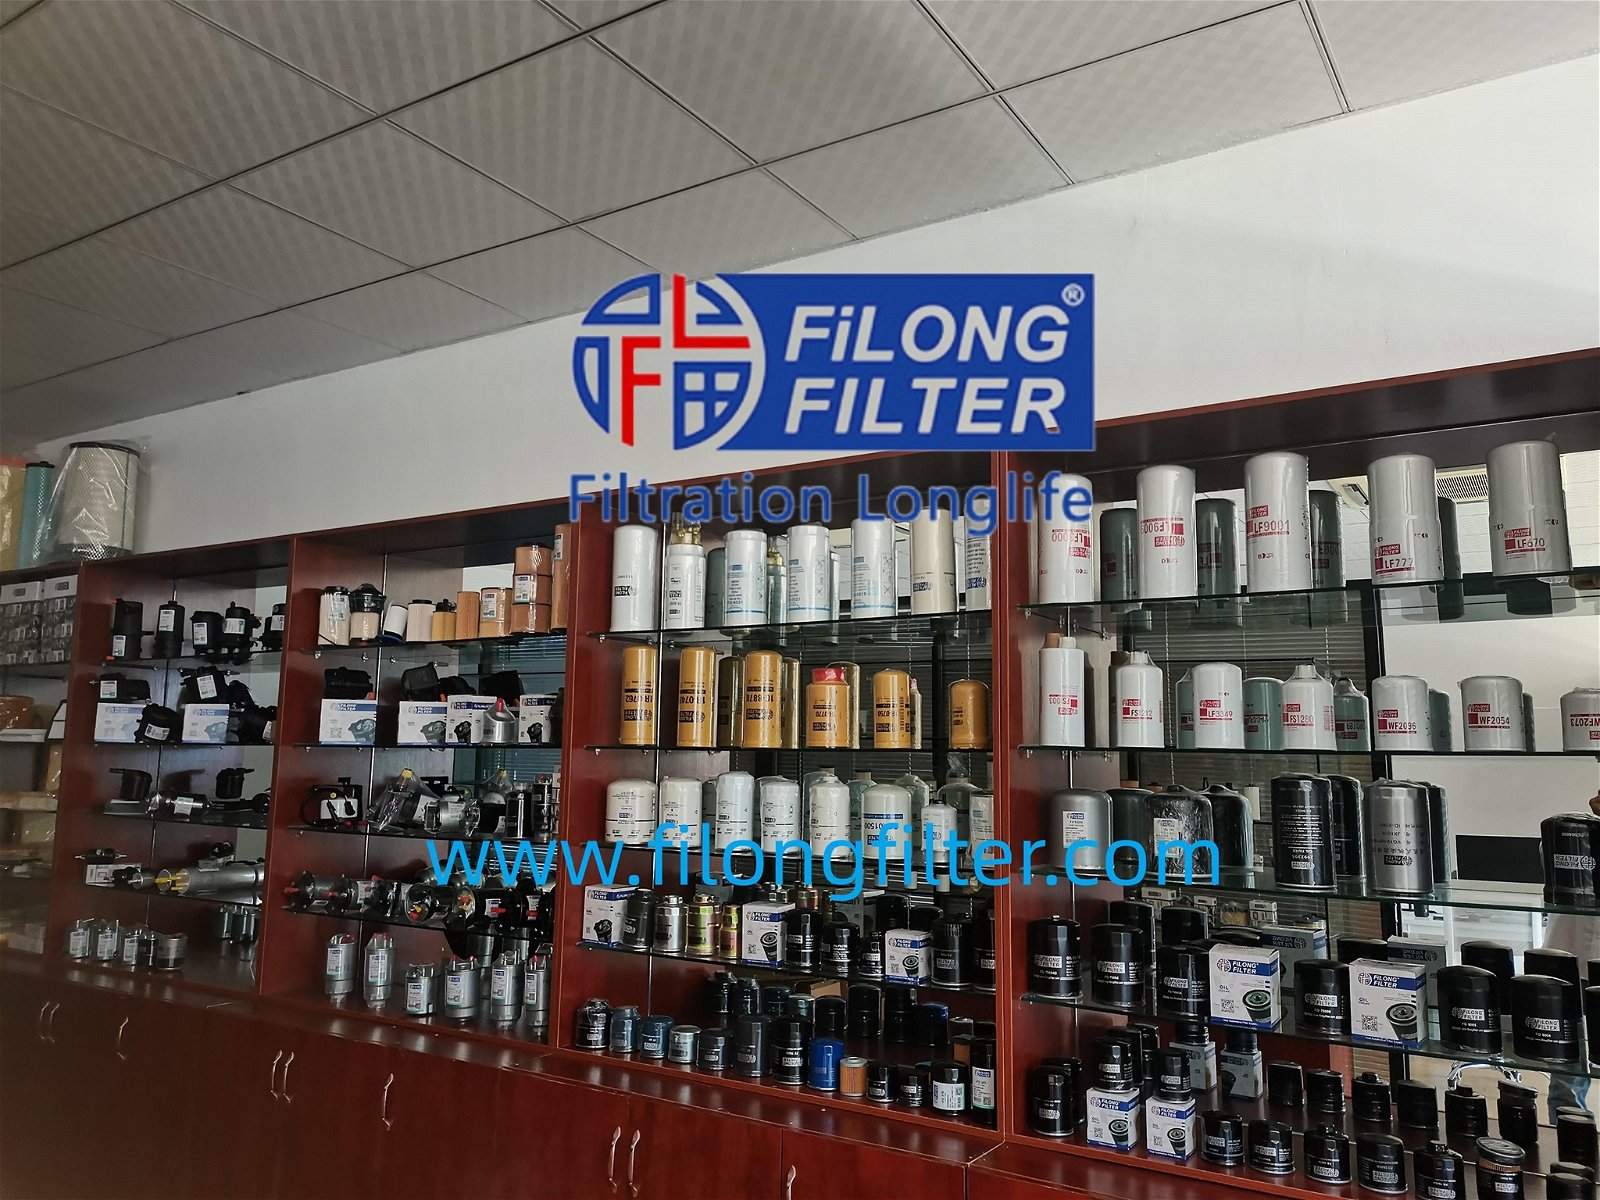 FILONG FILTER Manufacturer supply all kinds of replace filter for :AGCO FILTER，ATLAS COPCO FILTER，BALDWIN FILTER，BOMAG FILTER，CATERPILLAR FILTER，CNH FILTER，CASE IH FILTER，NEW HOLLAND FILTER，IVECO FILTER，CUMMINS-FLEETGUARD ，DAF FILTER，DEUTZ FILTER，DONALDSON FILTER，DONGFENG TRUCK FILTER， DOOSAN ，DAEWOO， FILTERFAW FILTER，FG WILSON FILTER，FORD FILTER，FOTON FILTER，HENGST FILTER，HINO FILTER，HITACHI FILTER，HYUNDAI FILTER，HYVA FILTER，ISUZU FILTER，IVECO FILTER，JCB FILTER，JOHN DEERE FILTER，KING LONG HIGER， KOBELCO FILTER，KOMATSU FILTER，KUBOTA FILTER，LIUGONG FILTER，LH LEEMIN HYDRAULIC， MAN FILTER，MANN FILTER， ，MERCEDES BENZ FILTER，MITSUBISHI FILTER，MTU FILTER，NELSON FILTER，PARKER RACOR FILTER，PERKINS FILTER，PEUGEOT FILTER，RENAULT FILTER，SANY FILTER，TATA & Leyparts FILTER,SDEC/SHANGCHAI FILTER，SCANIA FILTER，SHACMAN/SHAANXI FILTER，SHANTUI FILTER，SINOTRUK HOWO FILTER，THERMO KING FILTER，TOYOTA FILTER，VOLVO FILTER，WEICHAI FILTER，XCMG FILTER，YANMAR FILTER，YUCHAI FILTER，KAESER FILTER，LIEBHERR FILTER，MP Filtri，SAIC-IVECO HONGYA